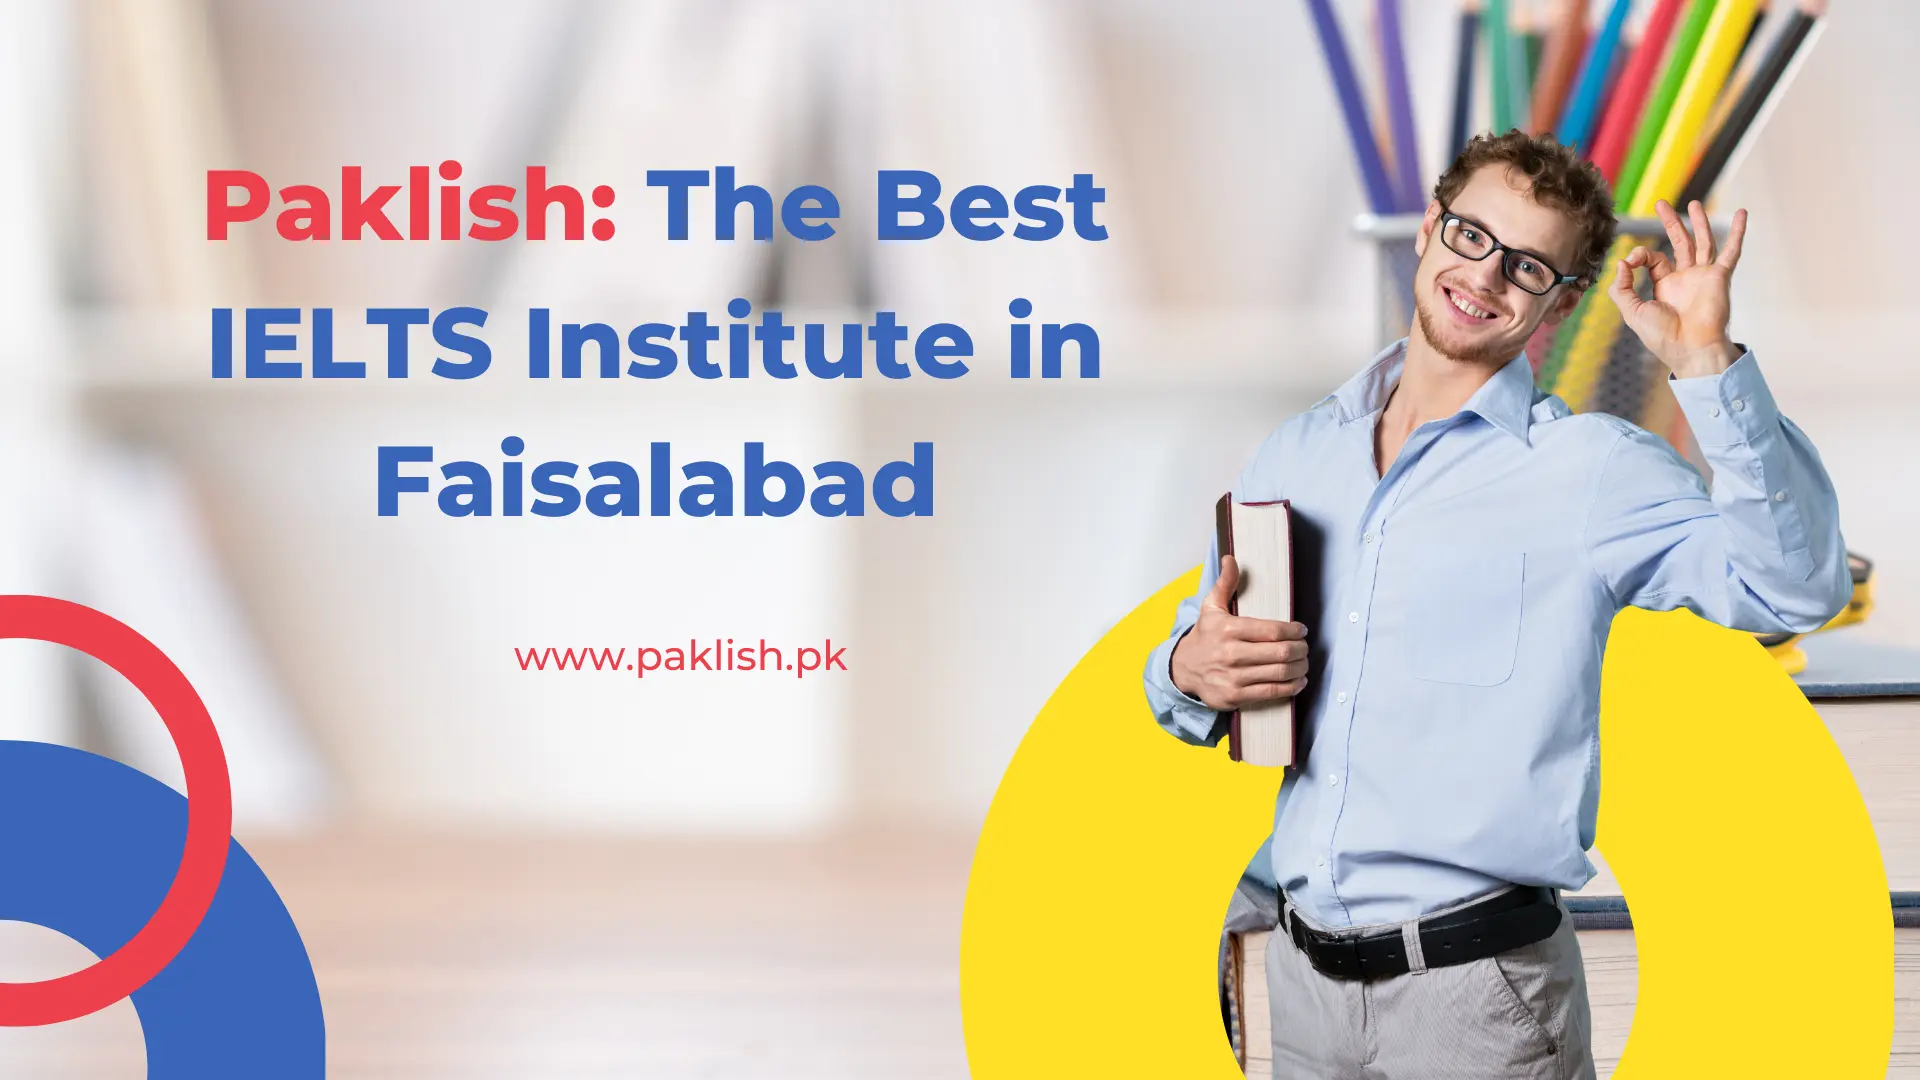 The Best IELTS Institute in Faisalabad